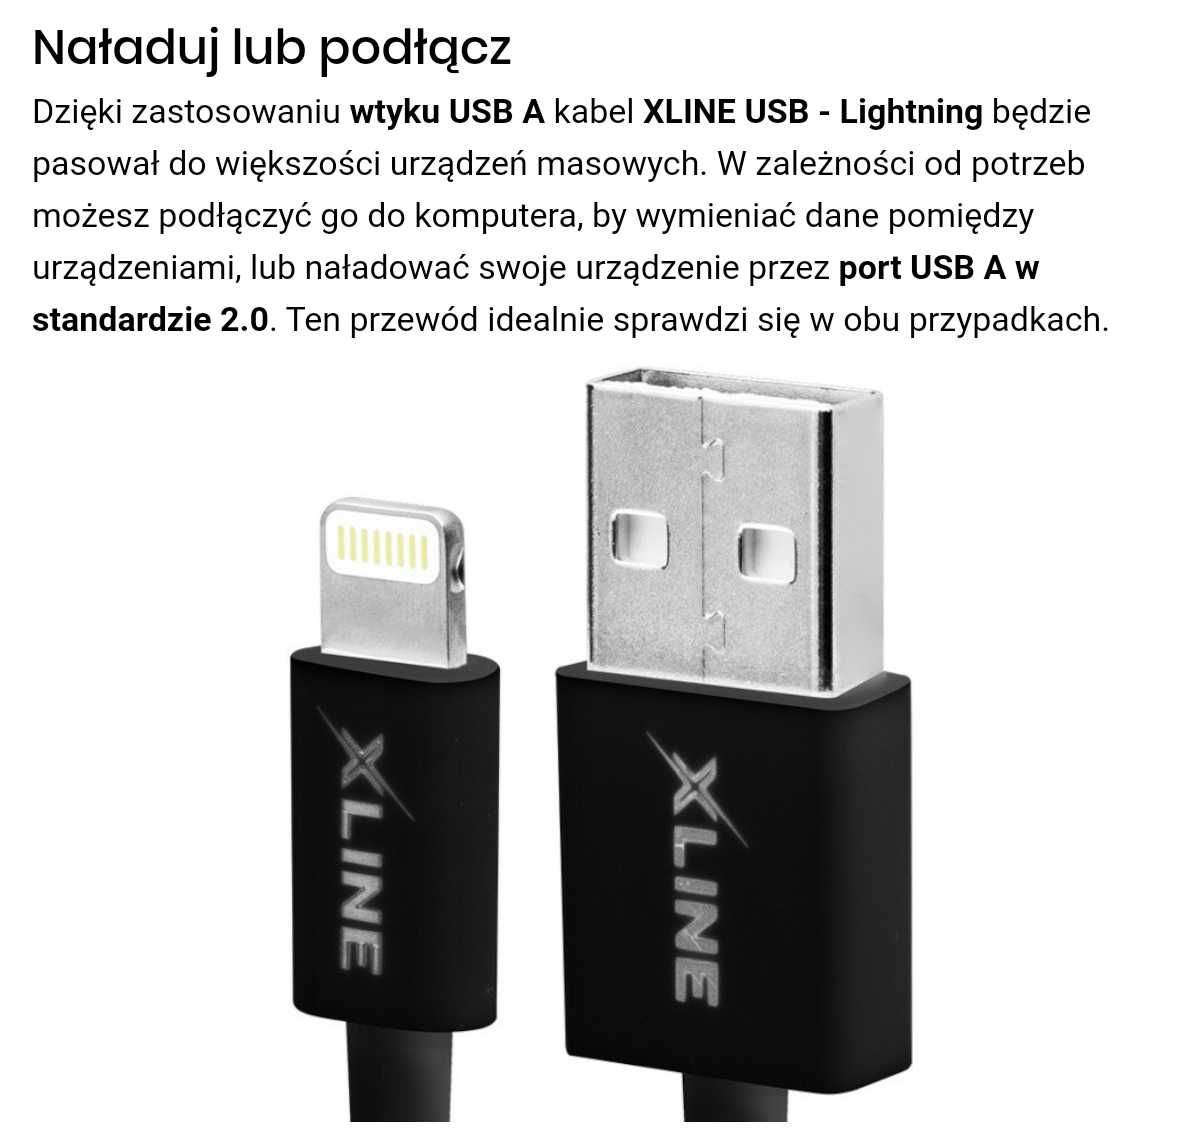 Kabel XLINE USB - Lightning długość 1 metr.